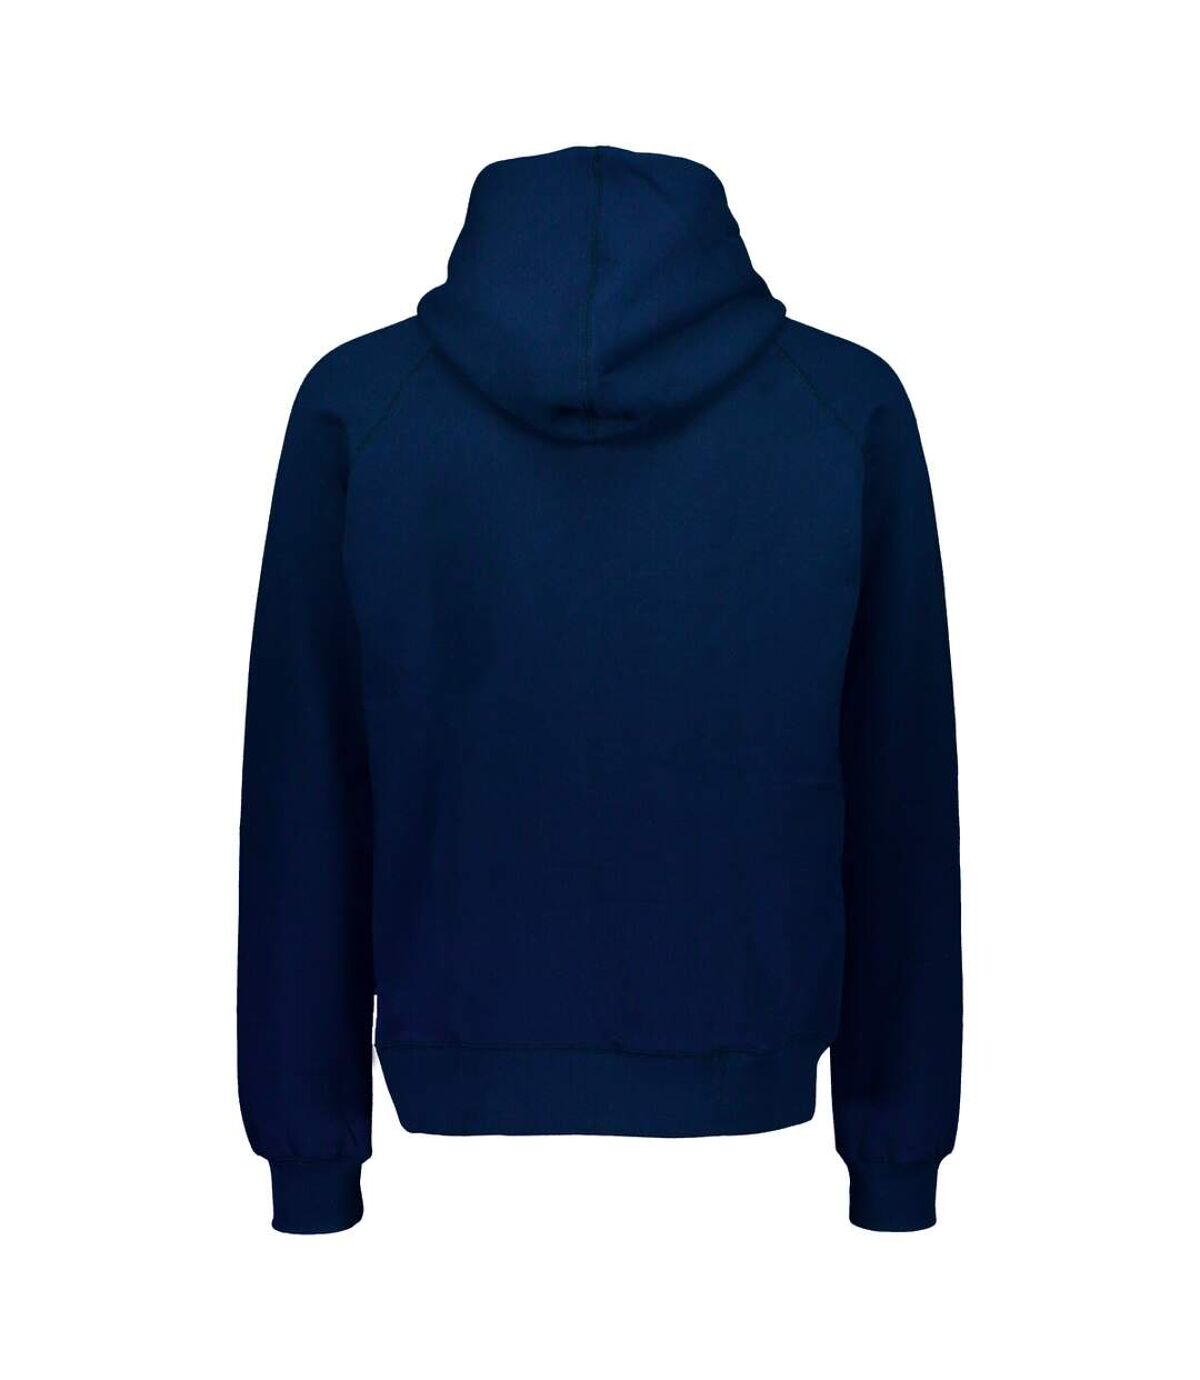 Tee Jays - Sweatshirt à capuche et fermeture zippée - Homme (Bleu marine) - UTBC3315